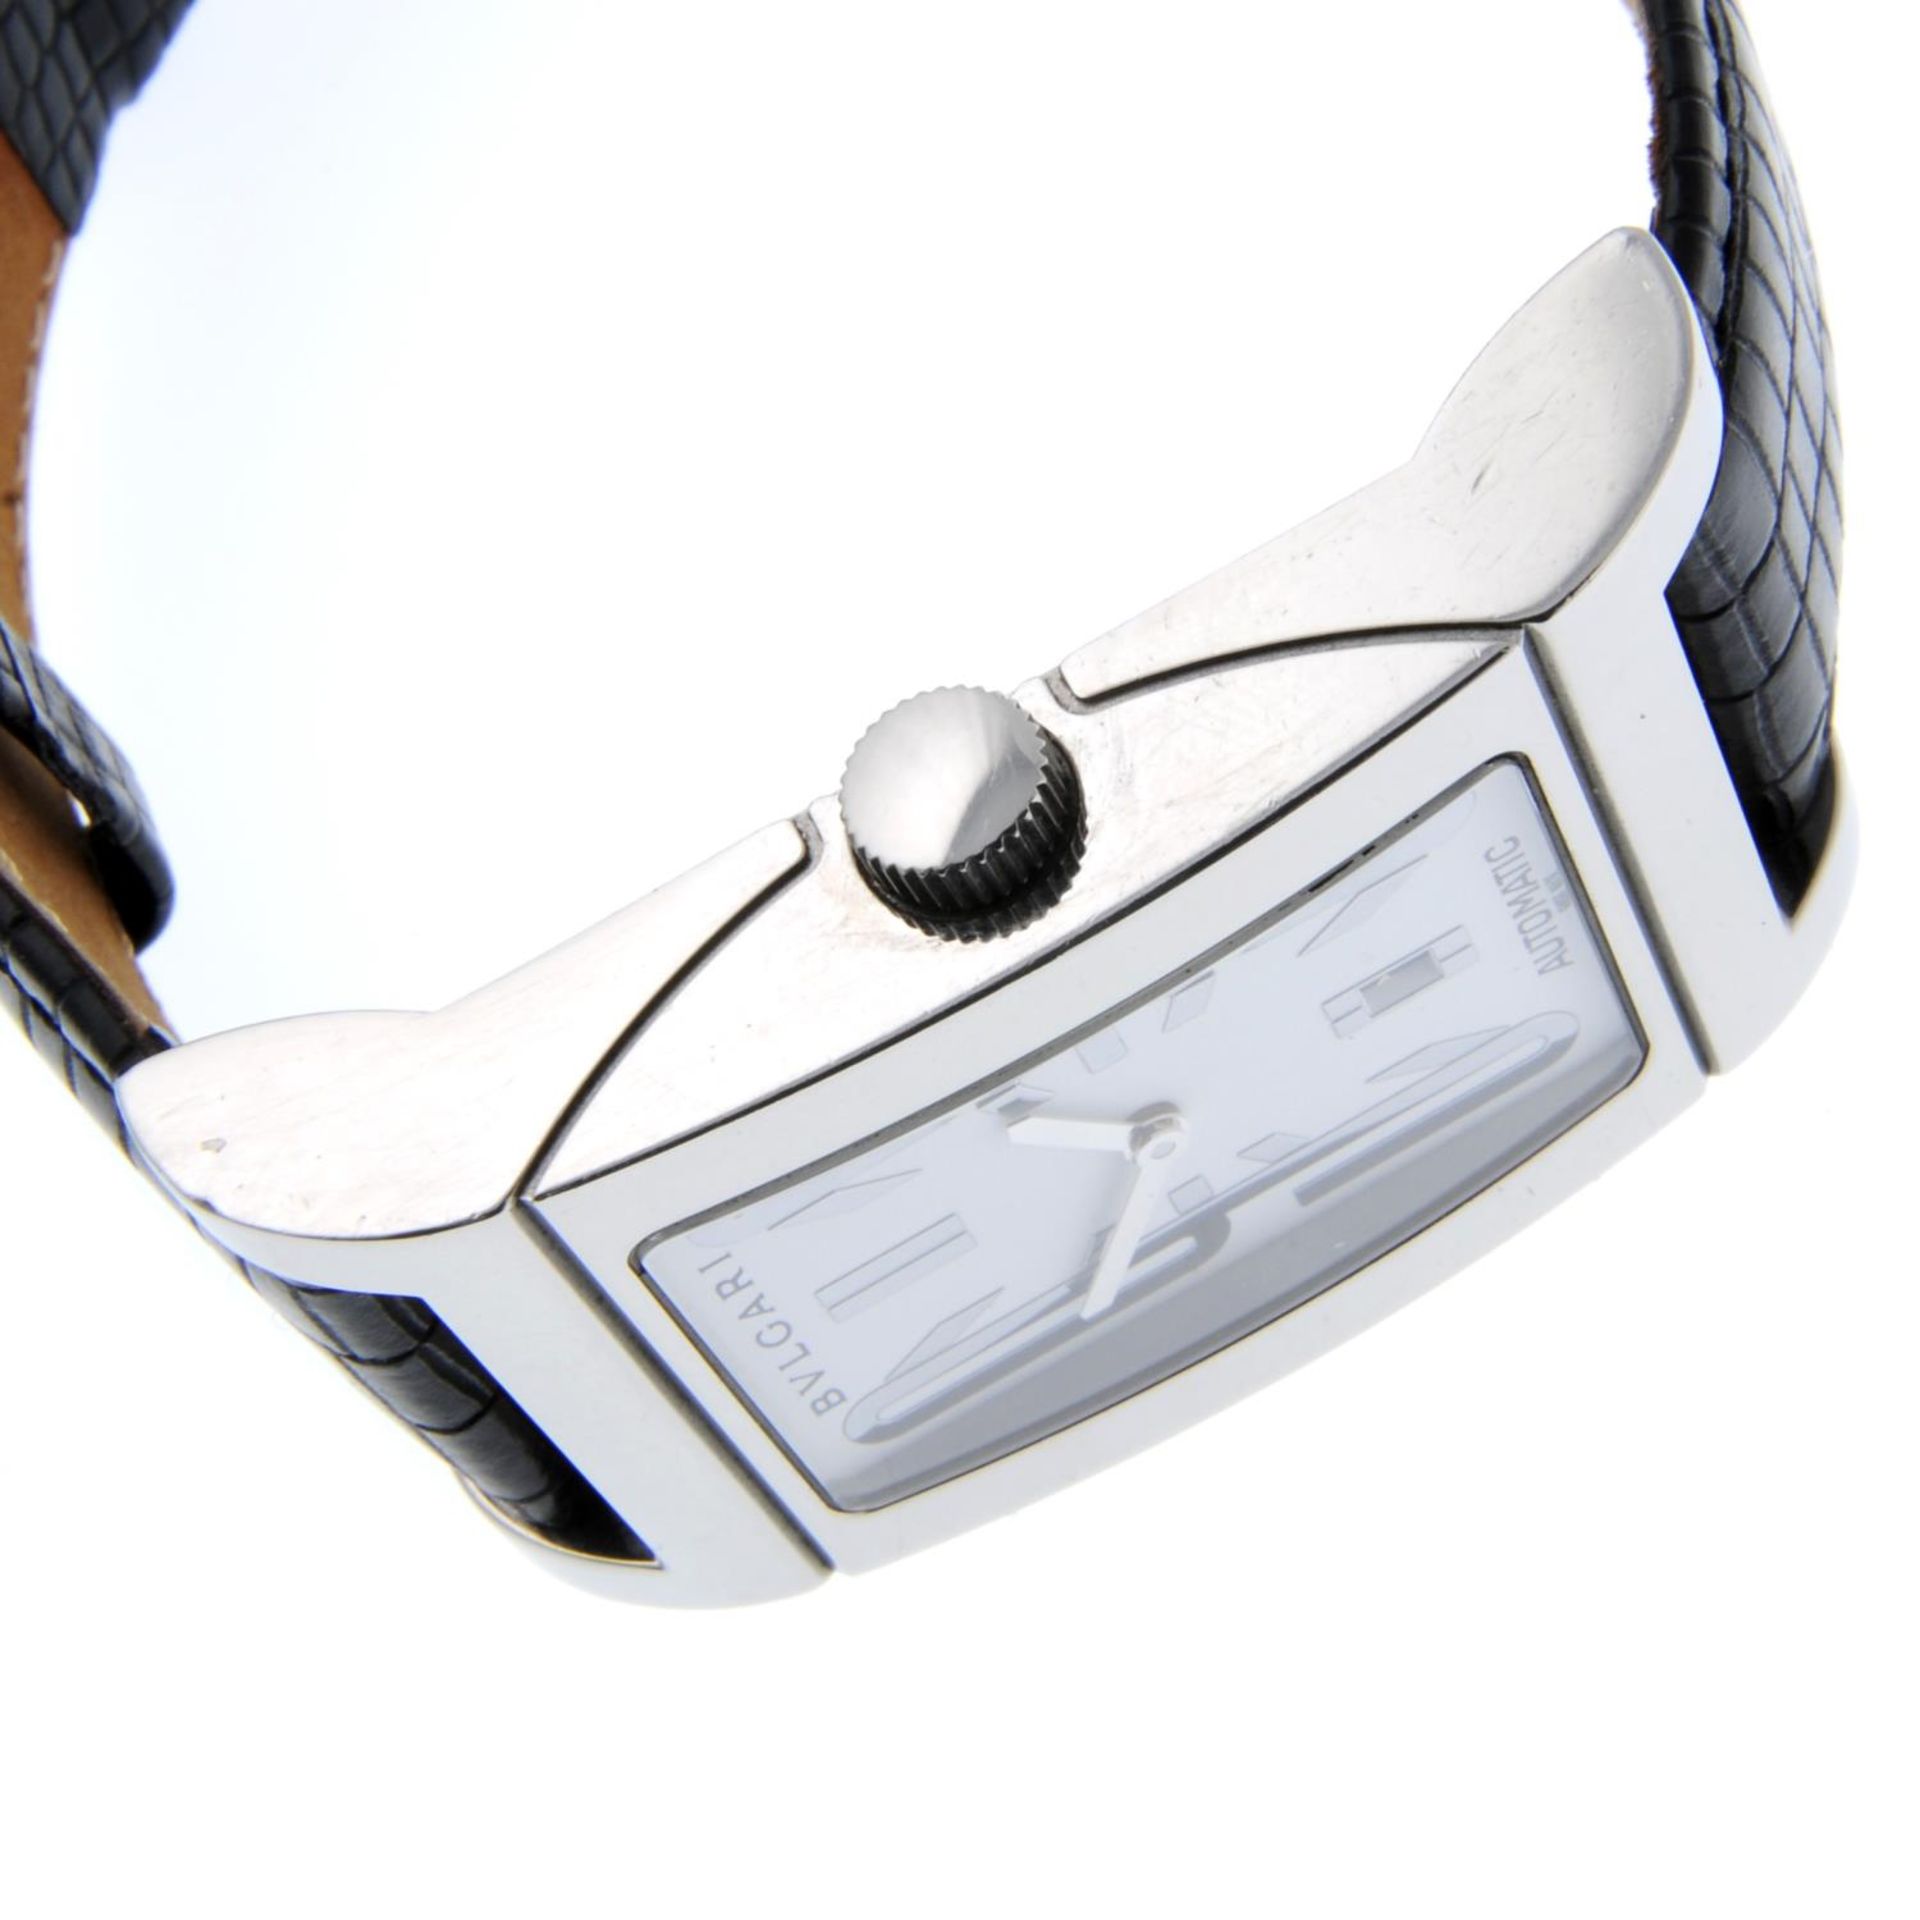 BULGARI - a gentleman's Rettangolo wrist watch. - Image 4 of 4